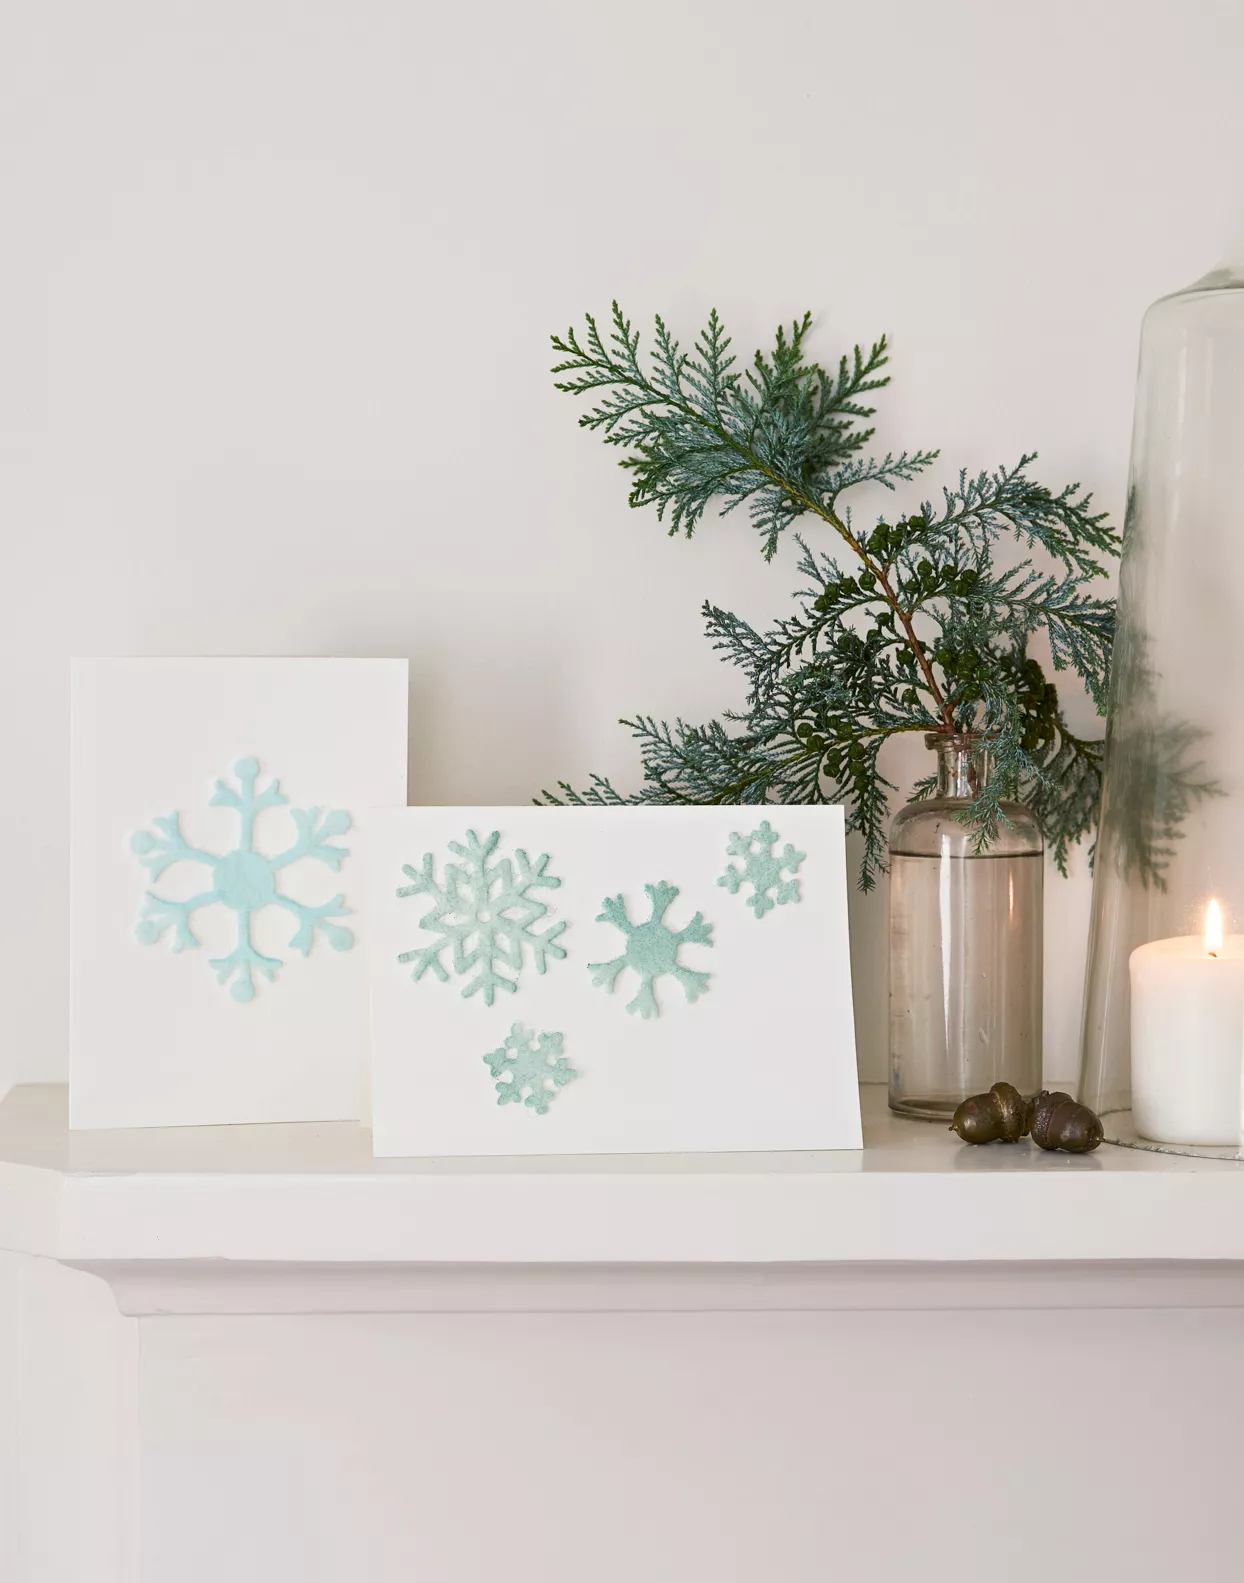 How to Make a Felt Snowflake Card